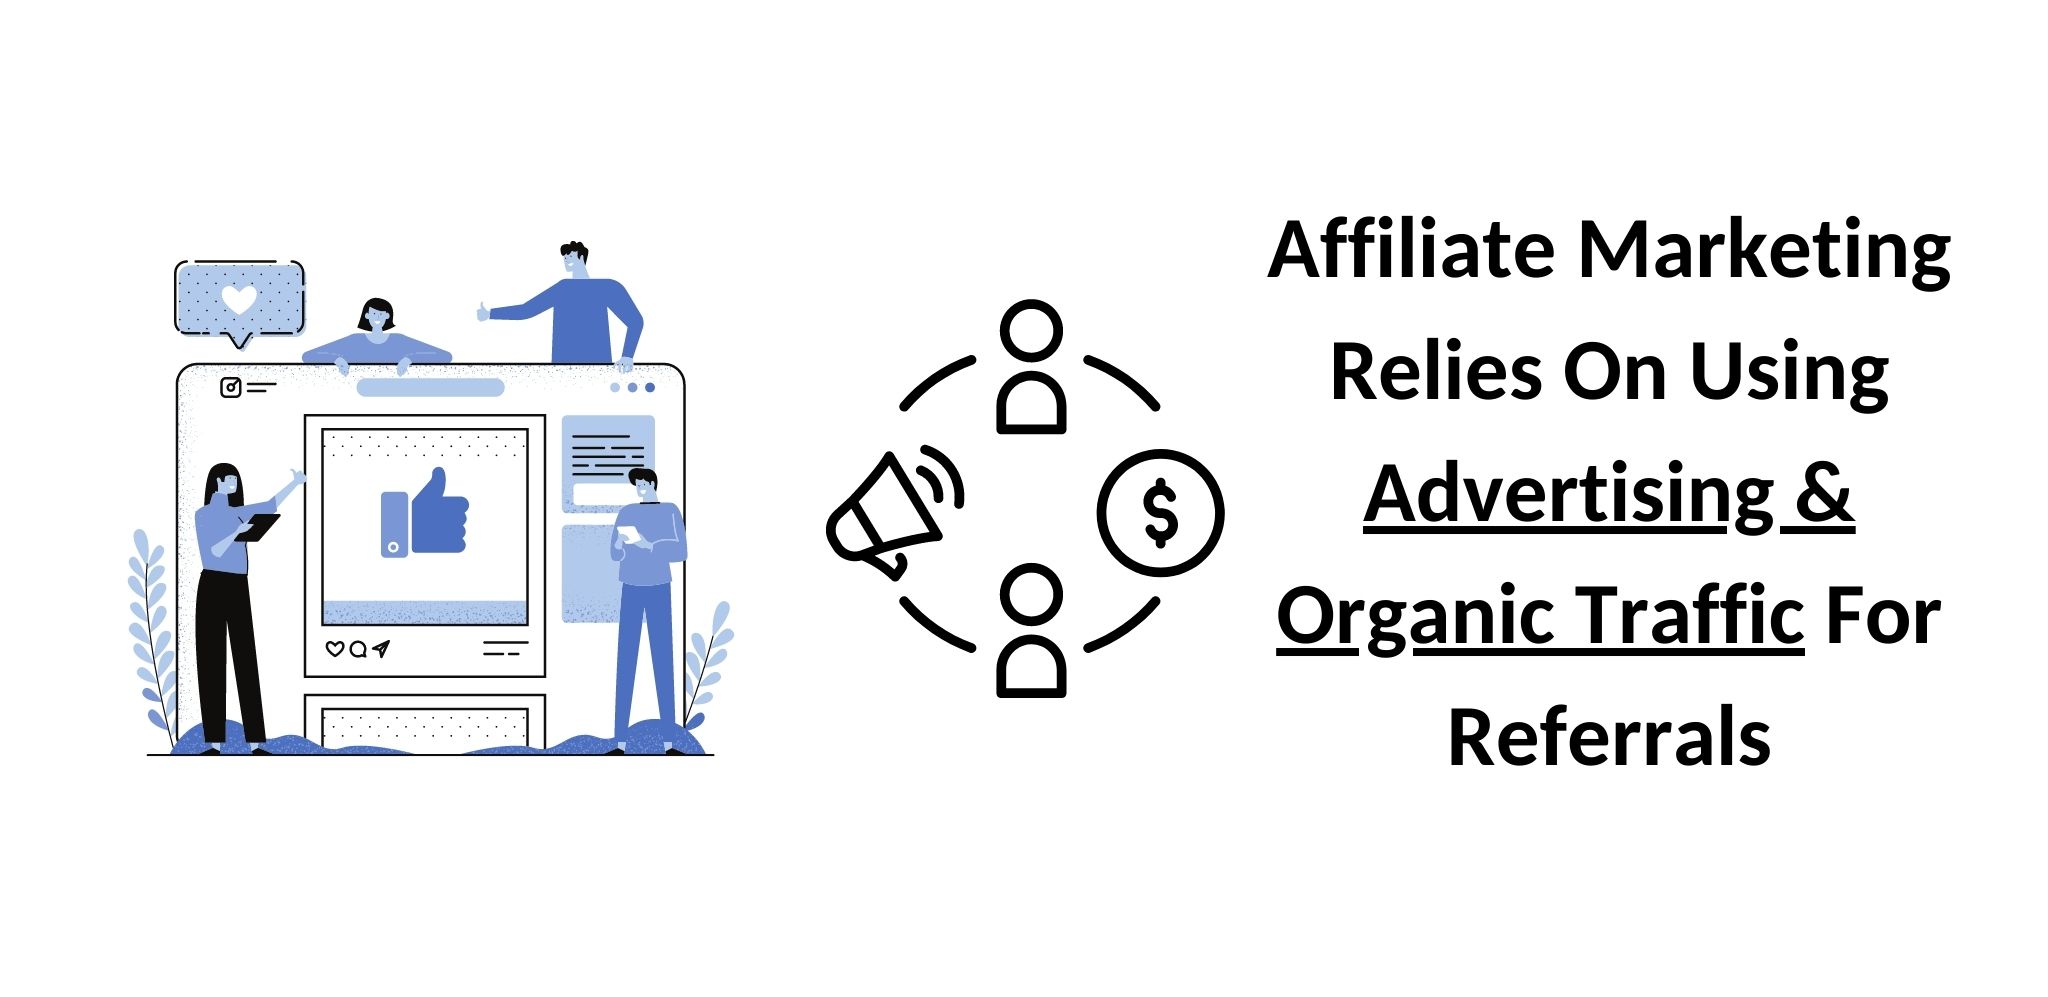 Affiliate Marketing Relies On Using Advertising & Organic Traffic